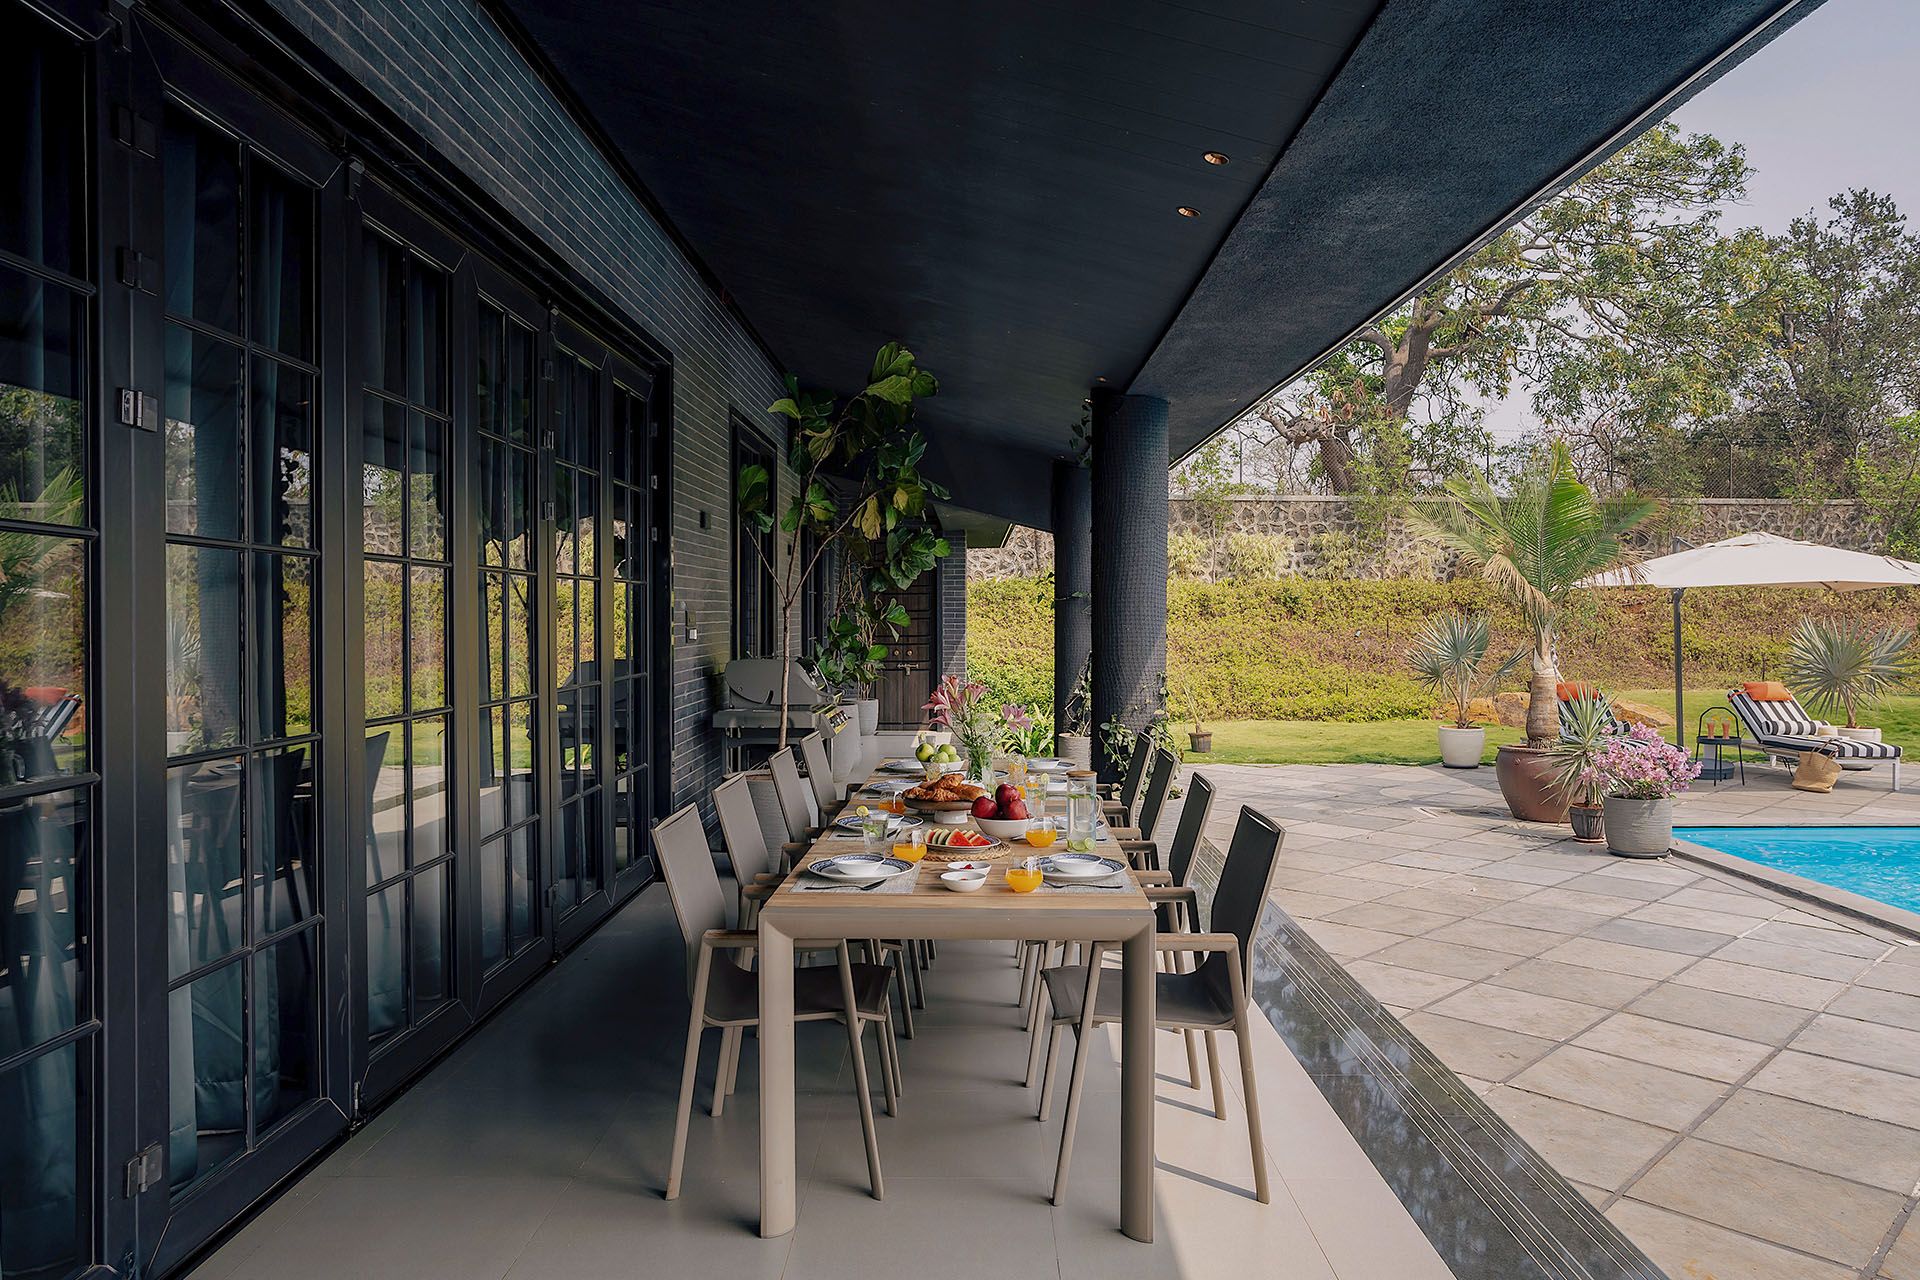 Uday Villa - Outdoor dining